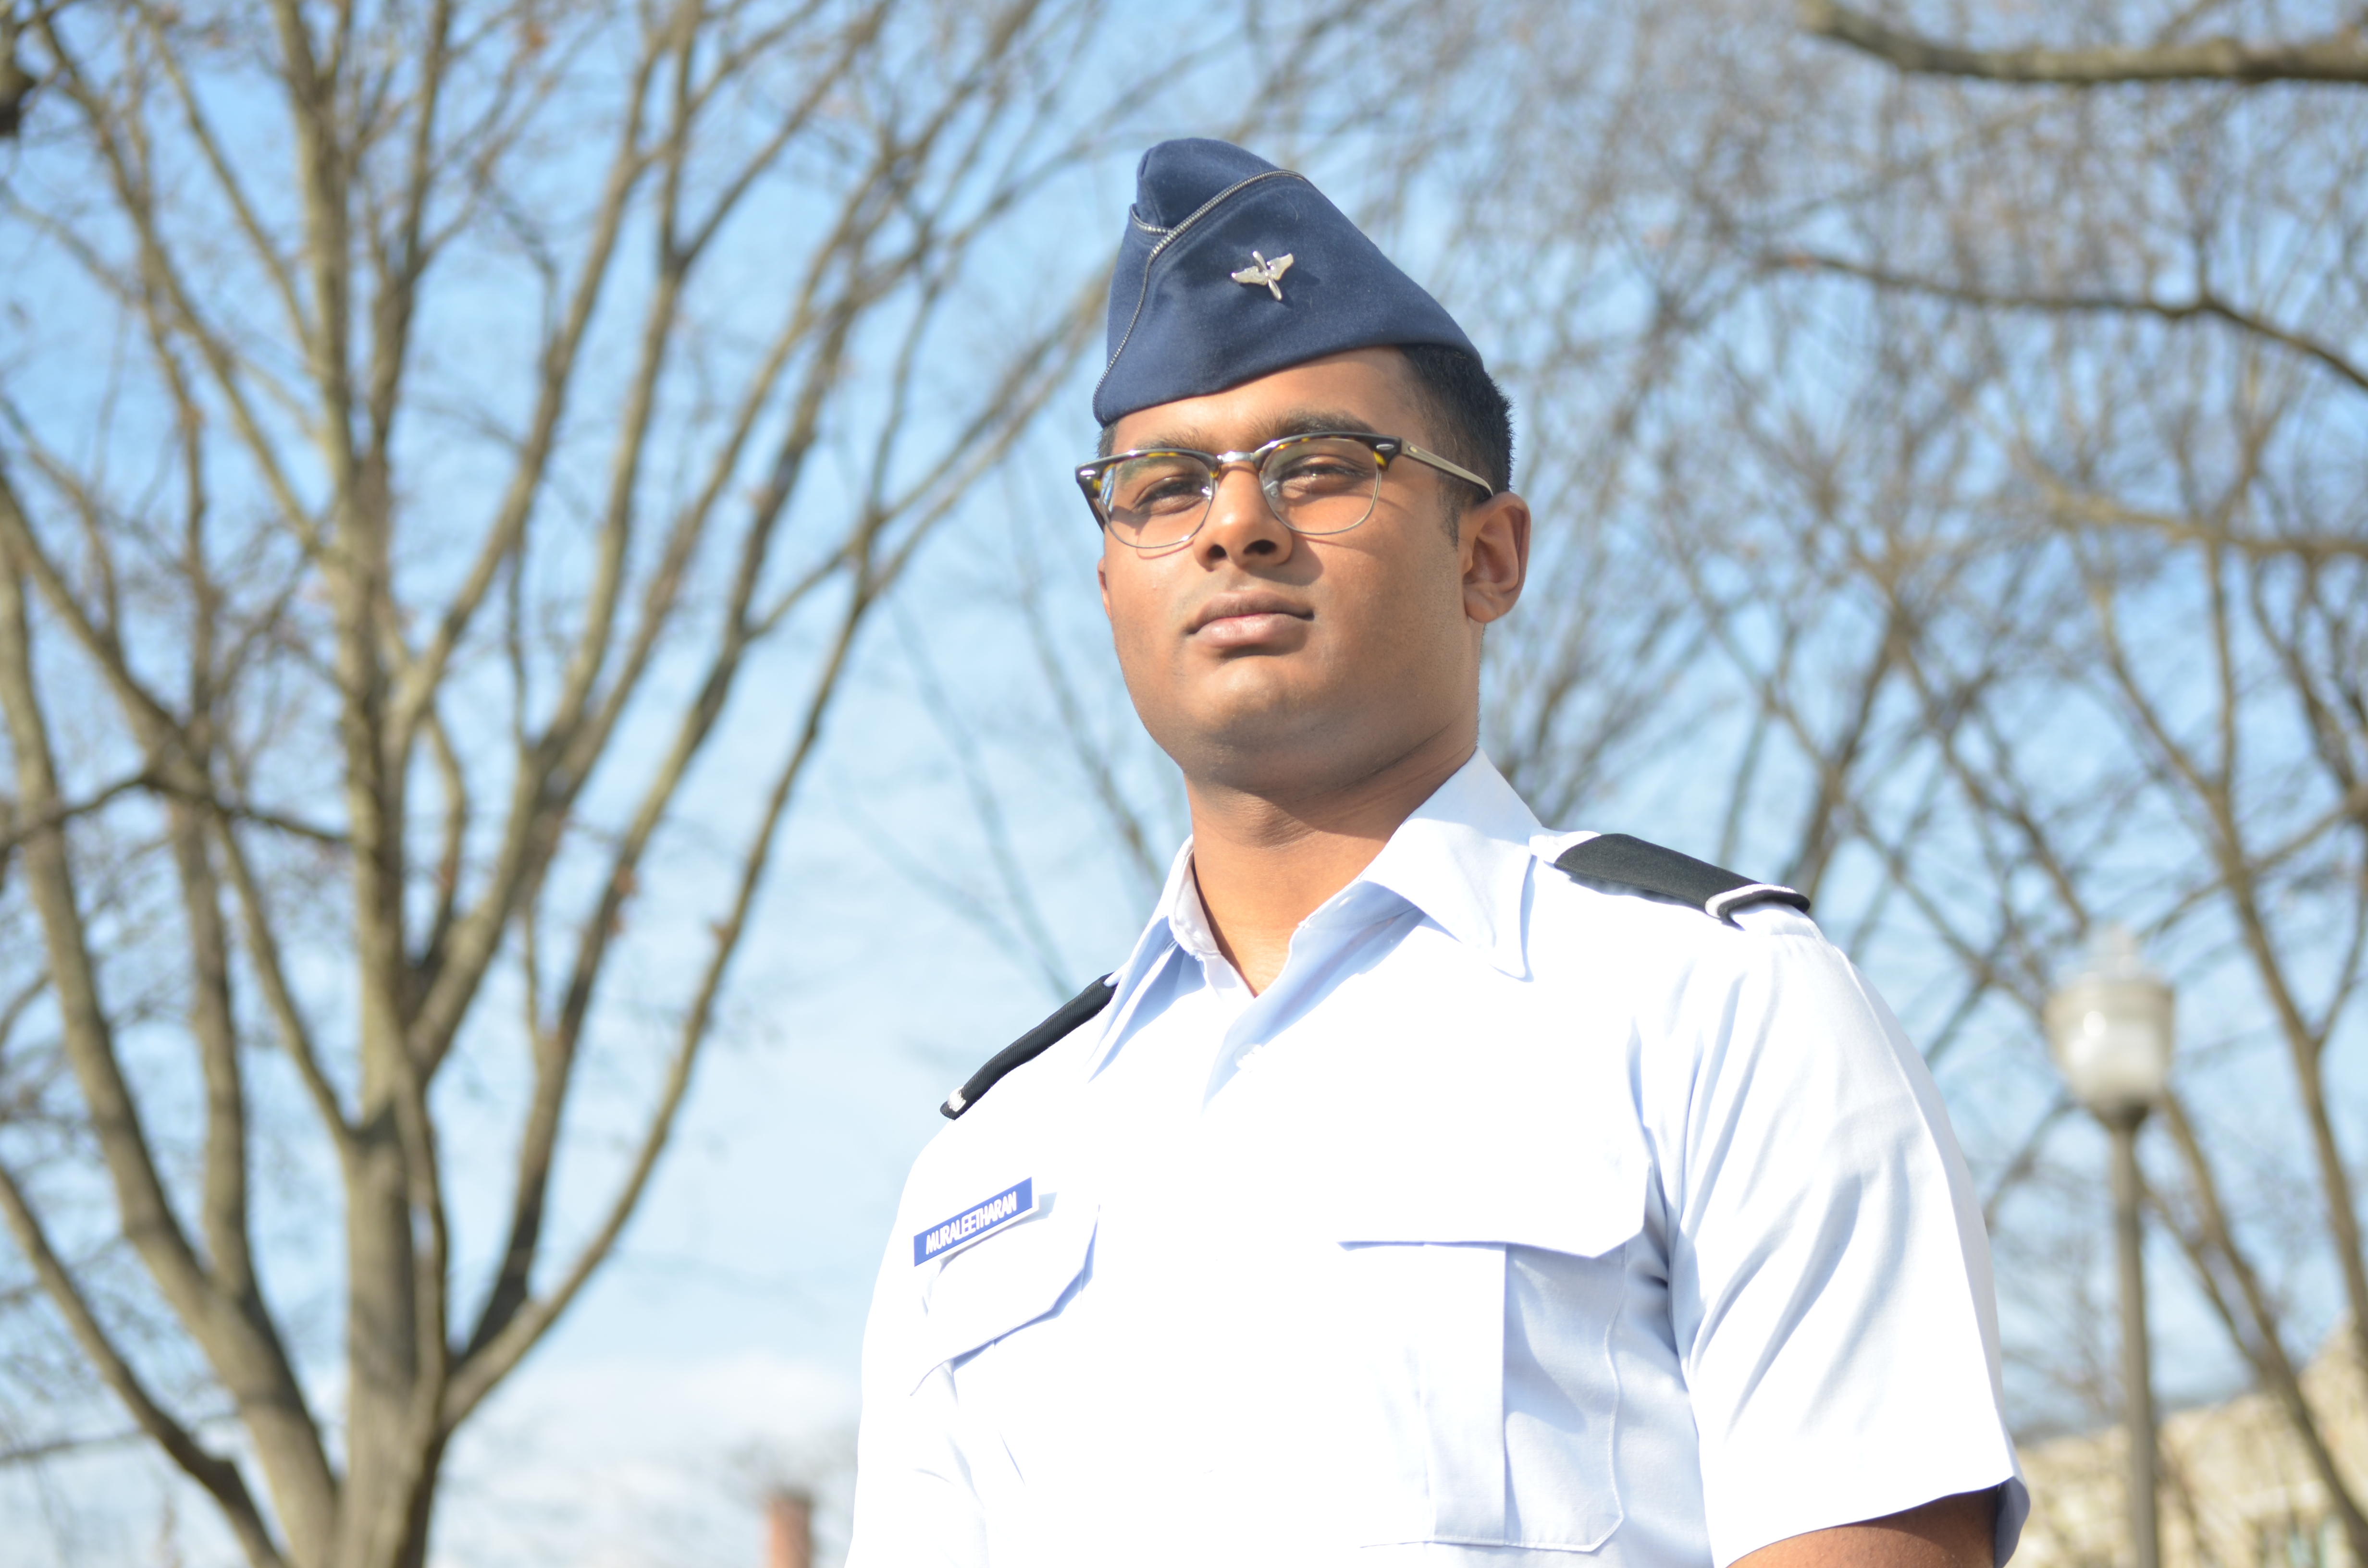 Air force cadet in uniform